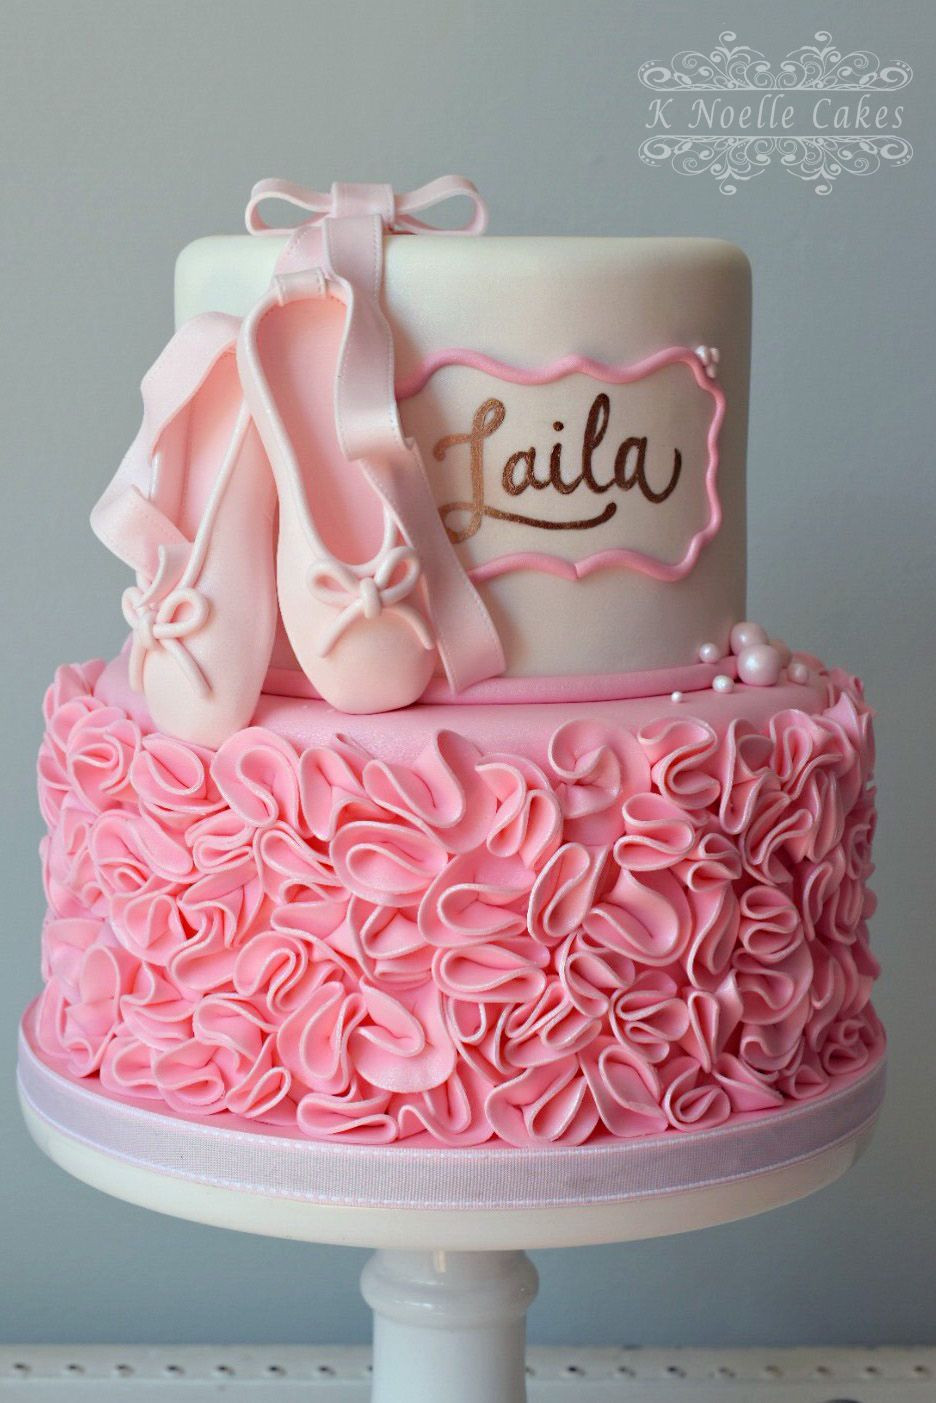 Ballarina Birthday Cake
 Ballerina theme birthday cake By K Noelle Cakes